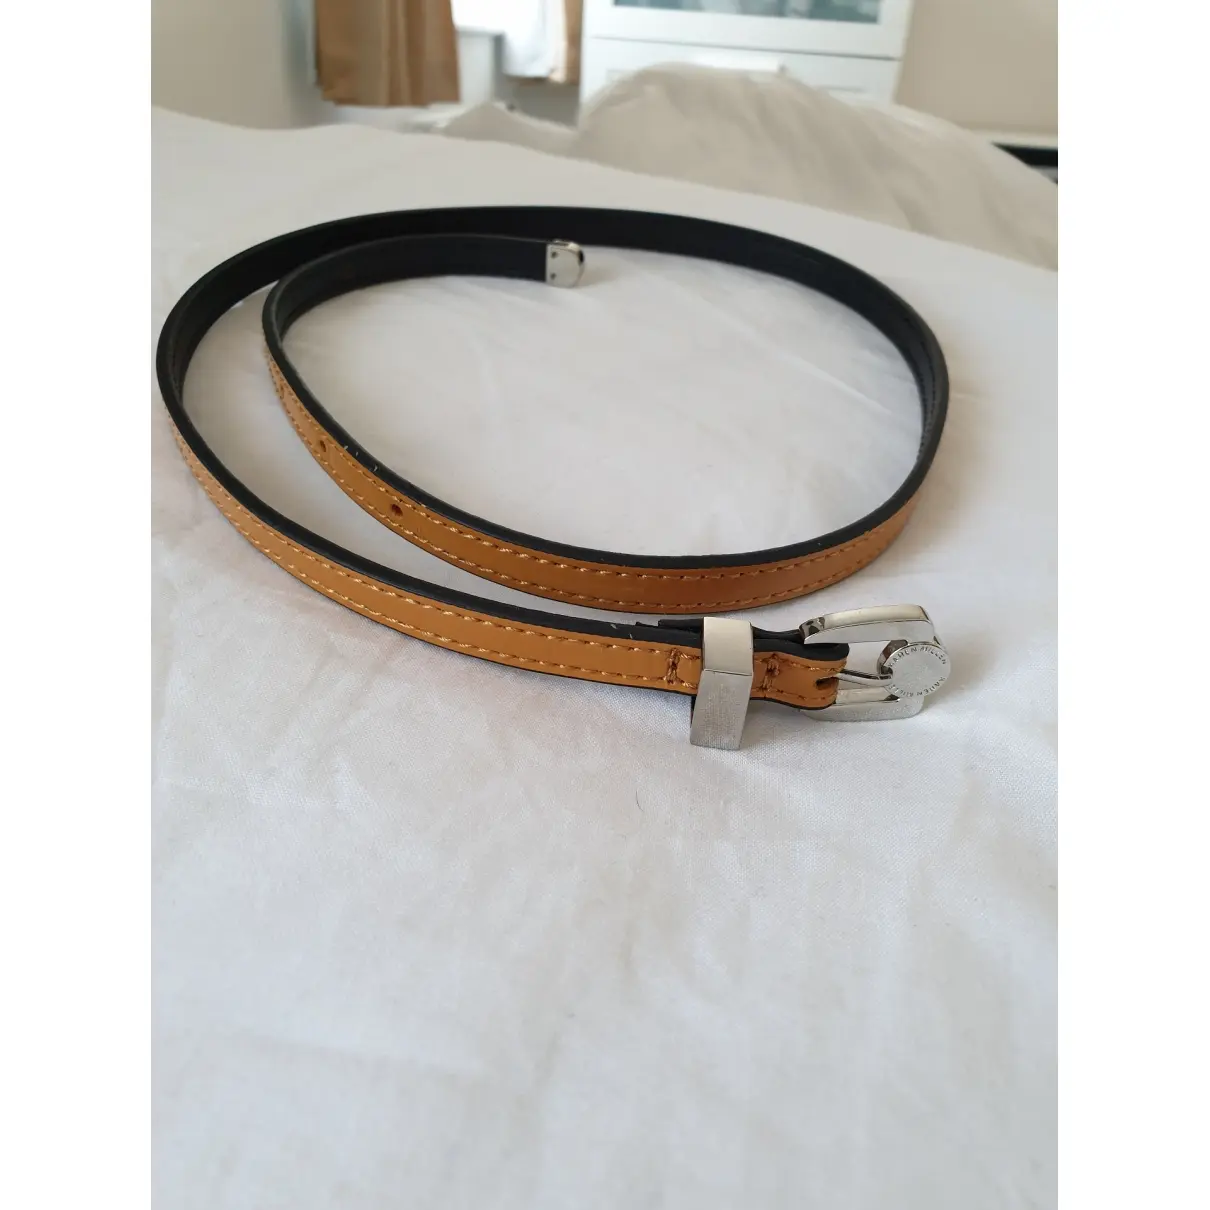 Karen Millen Patent leather belt for sale